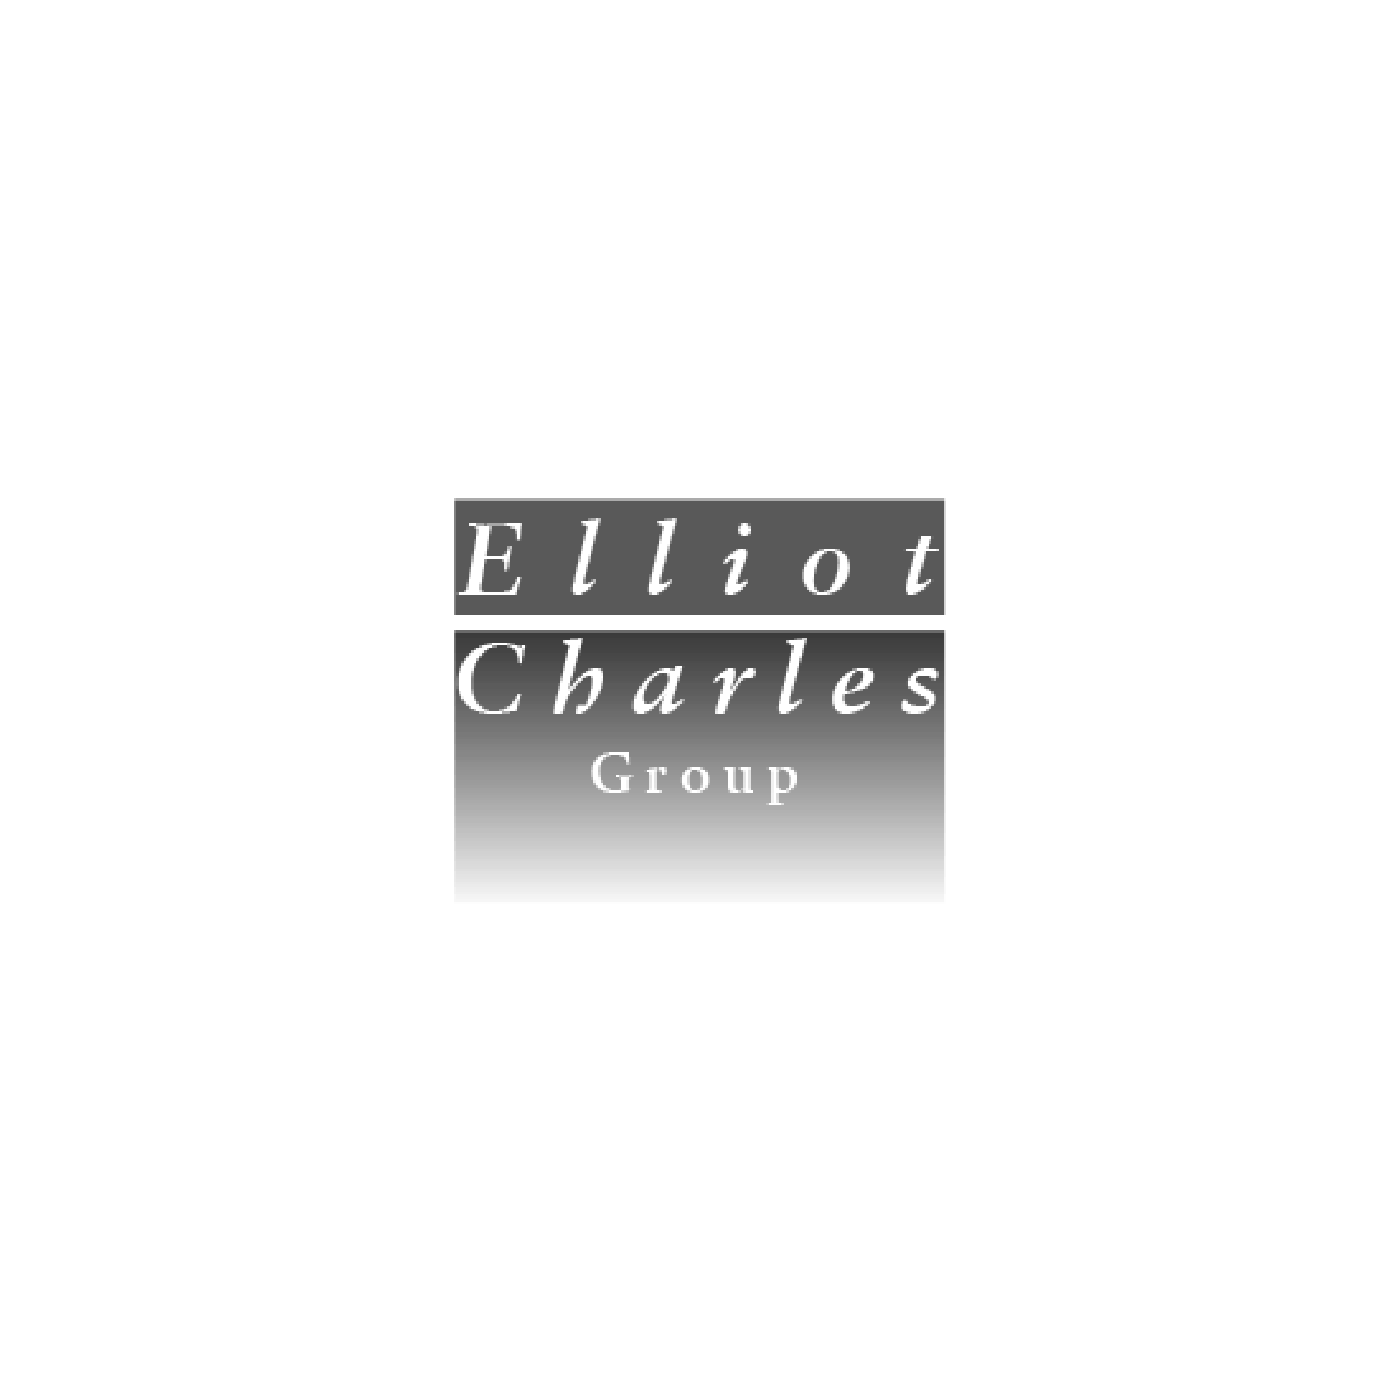 Elliot Charles